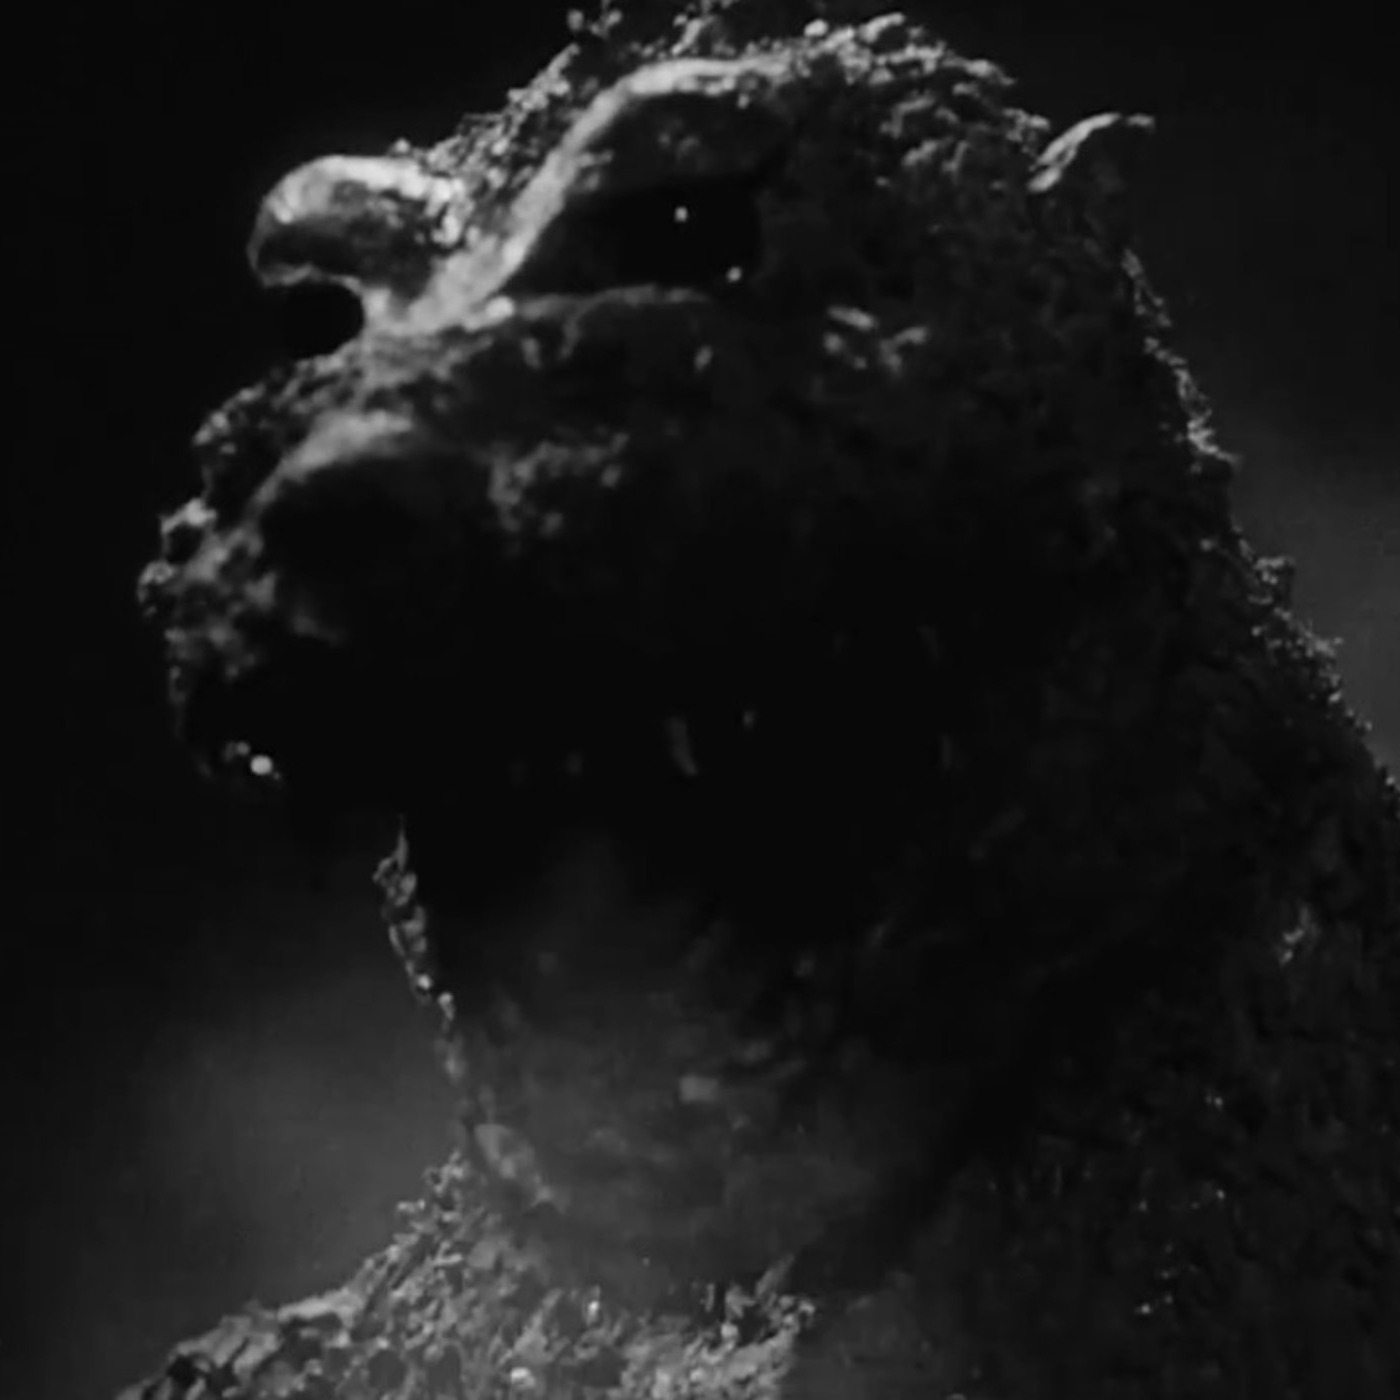 Ep. 1: Godzilla (1954)